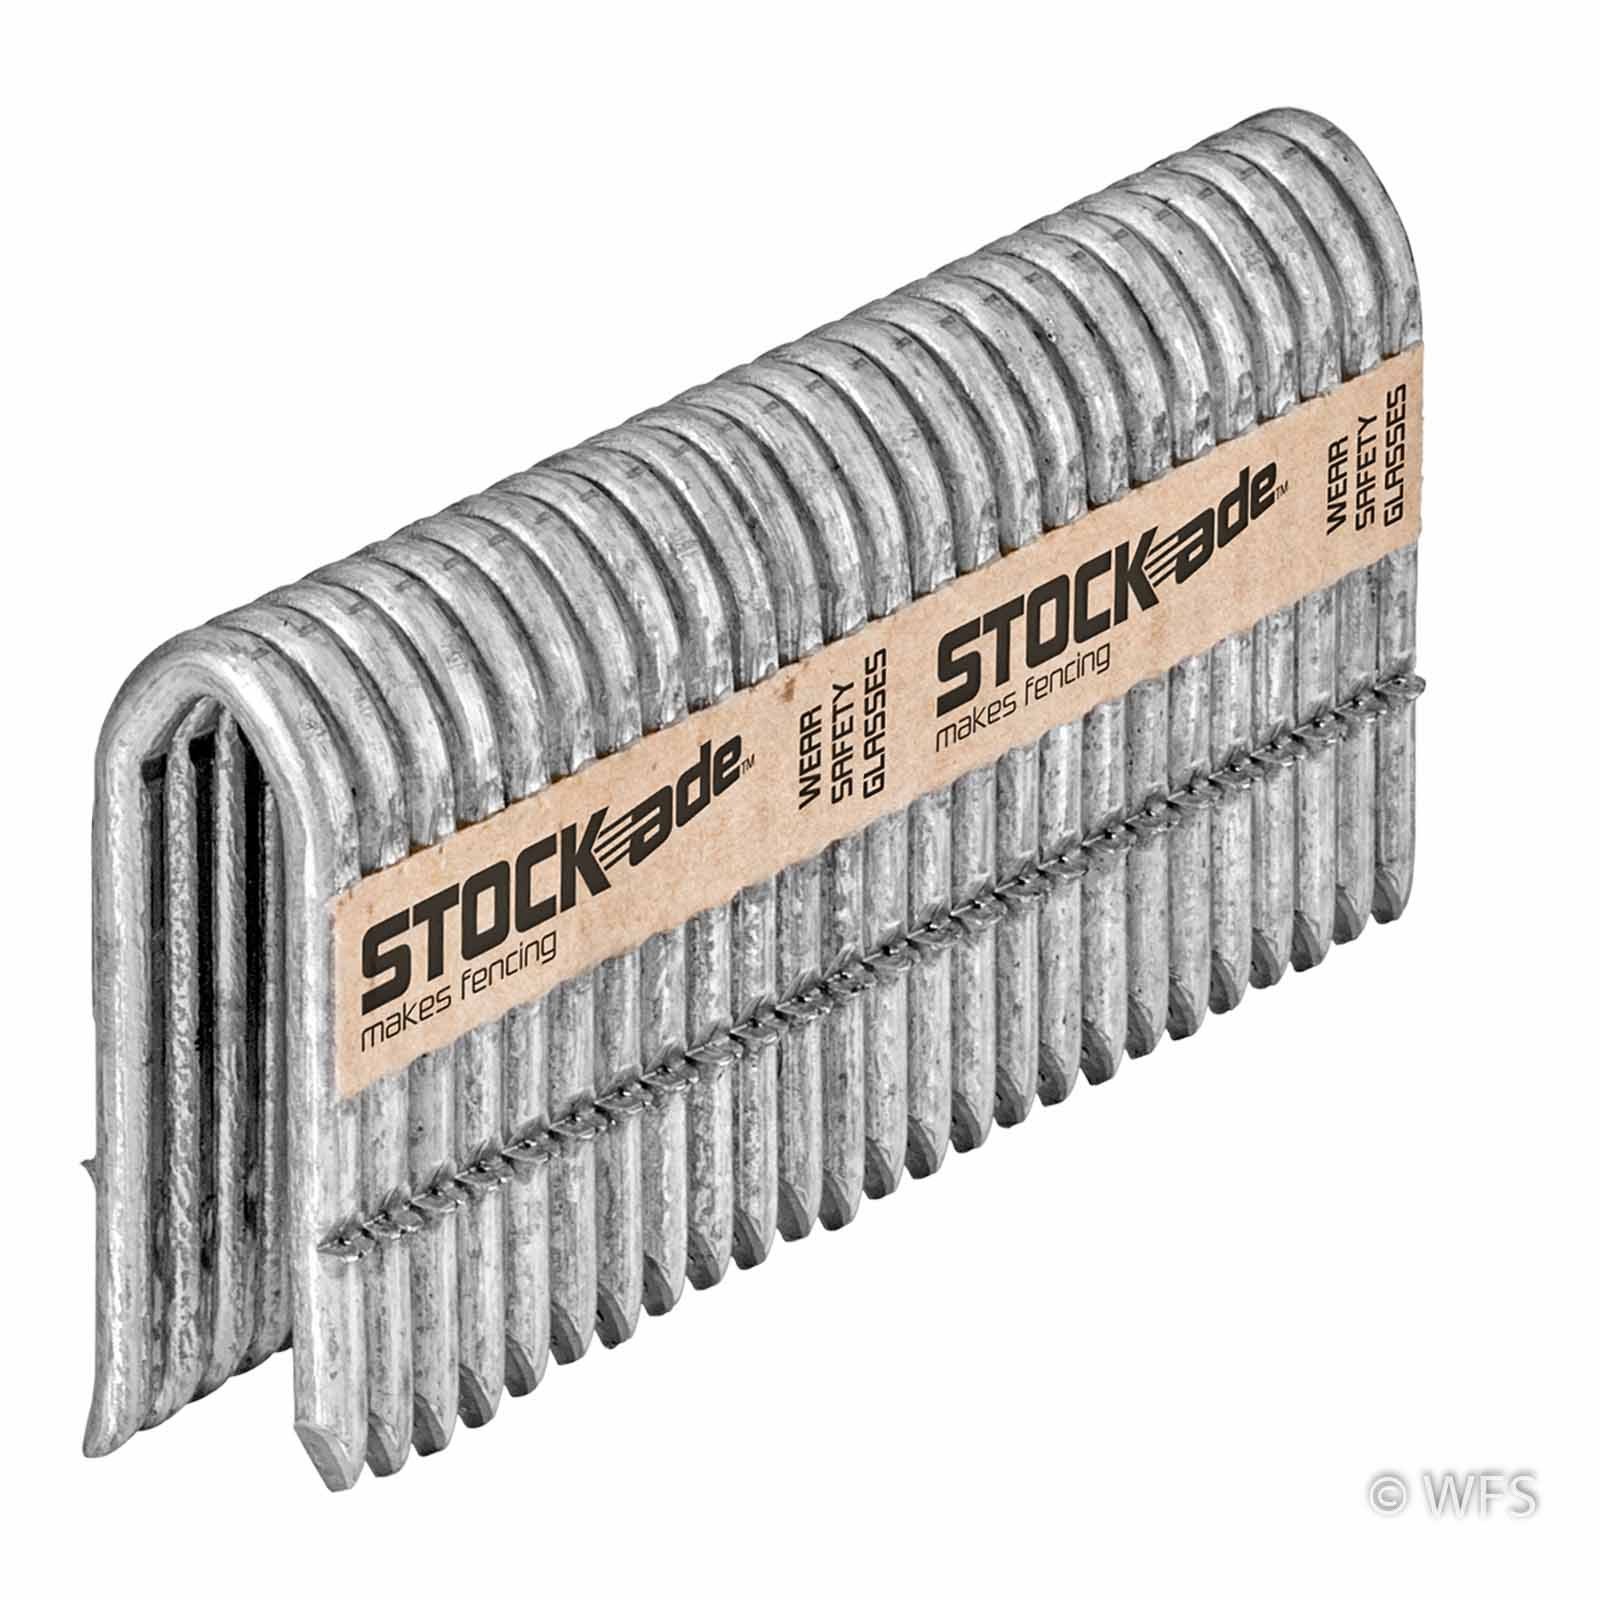 Stockade Staple Puller Tool —